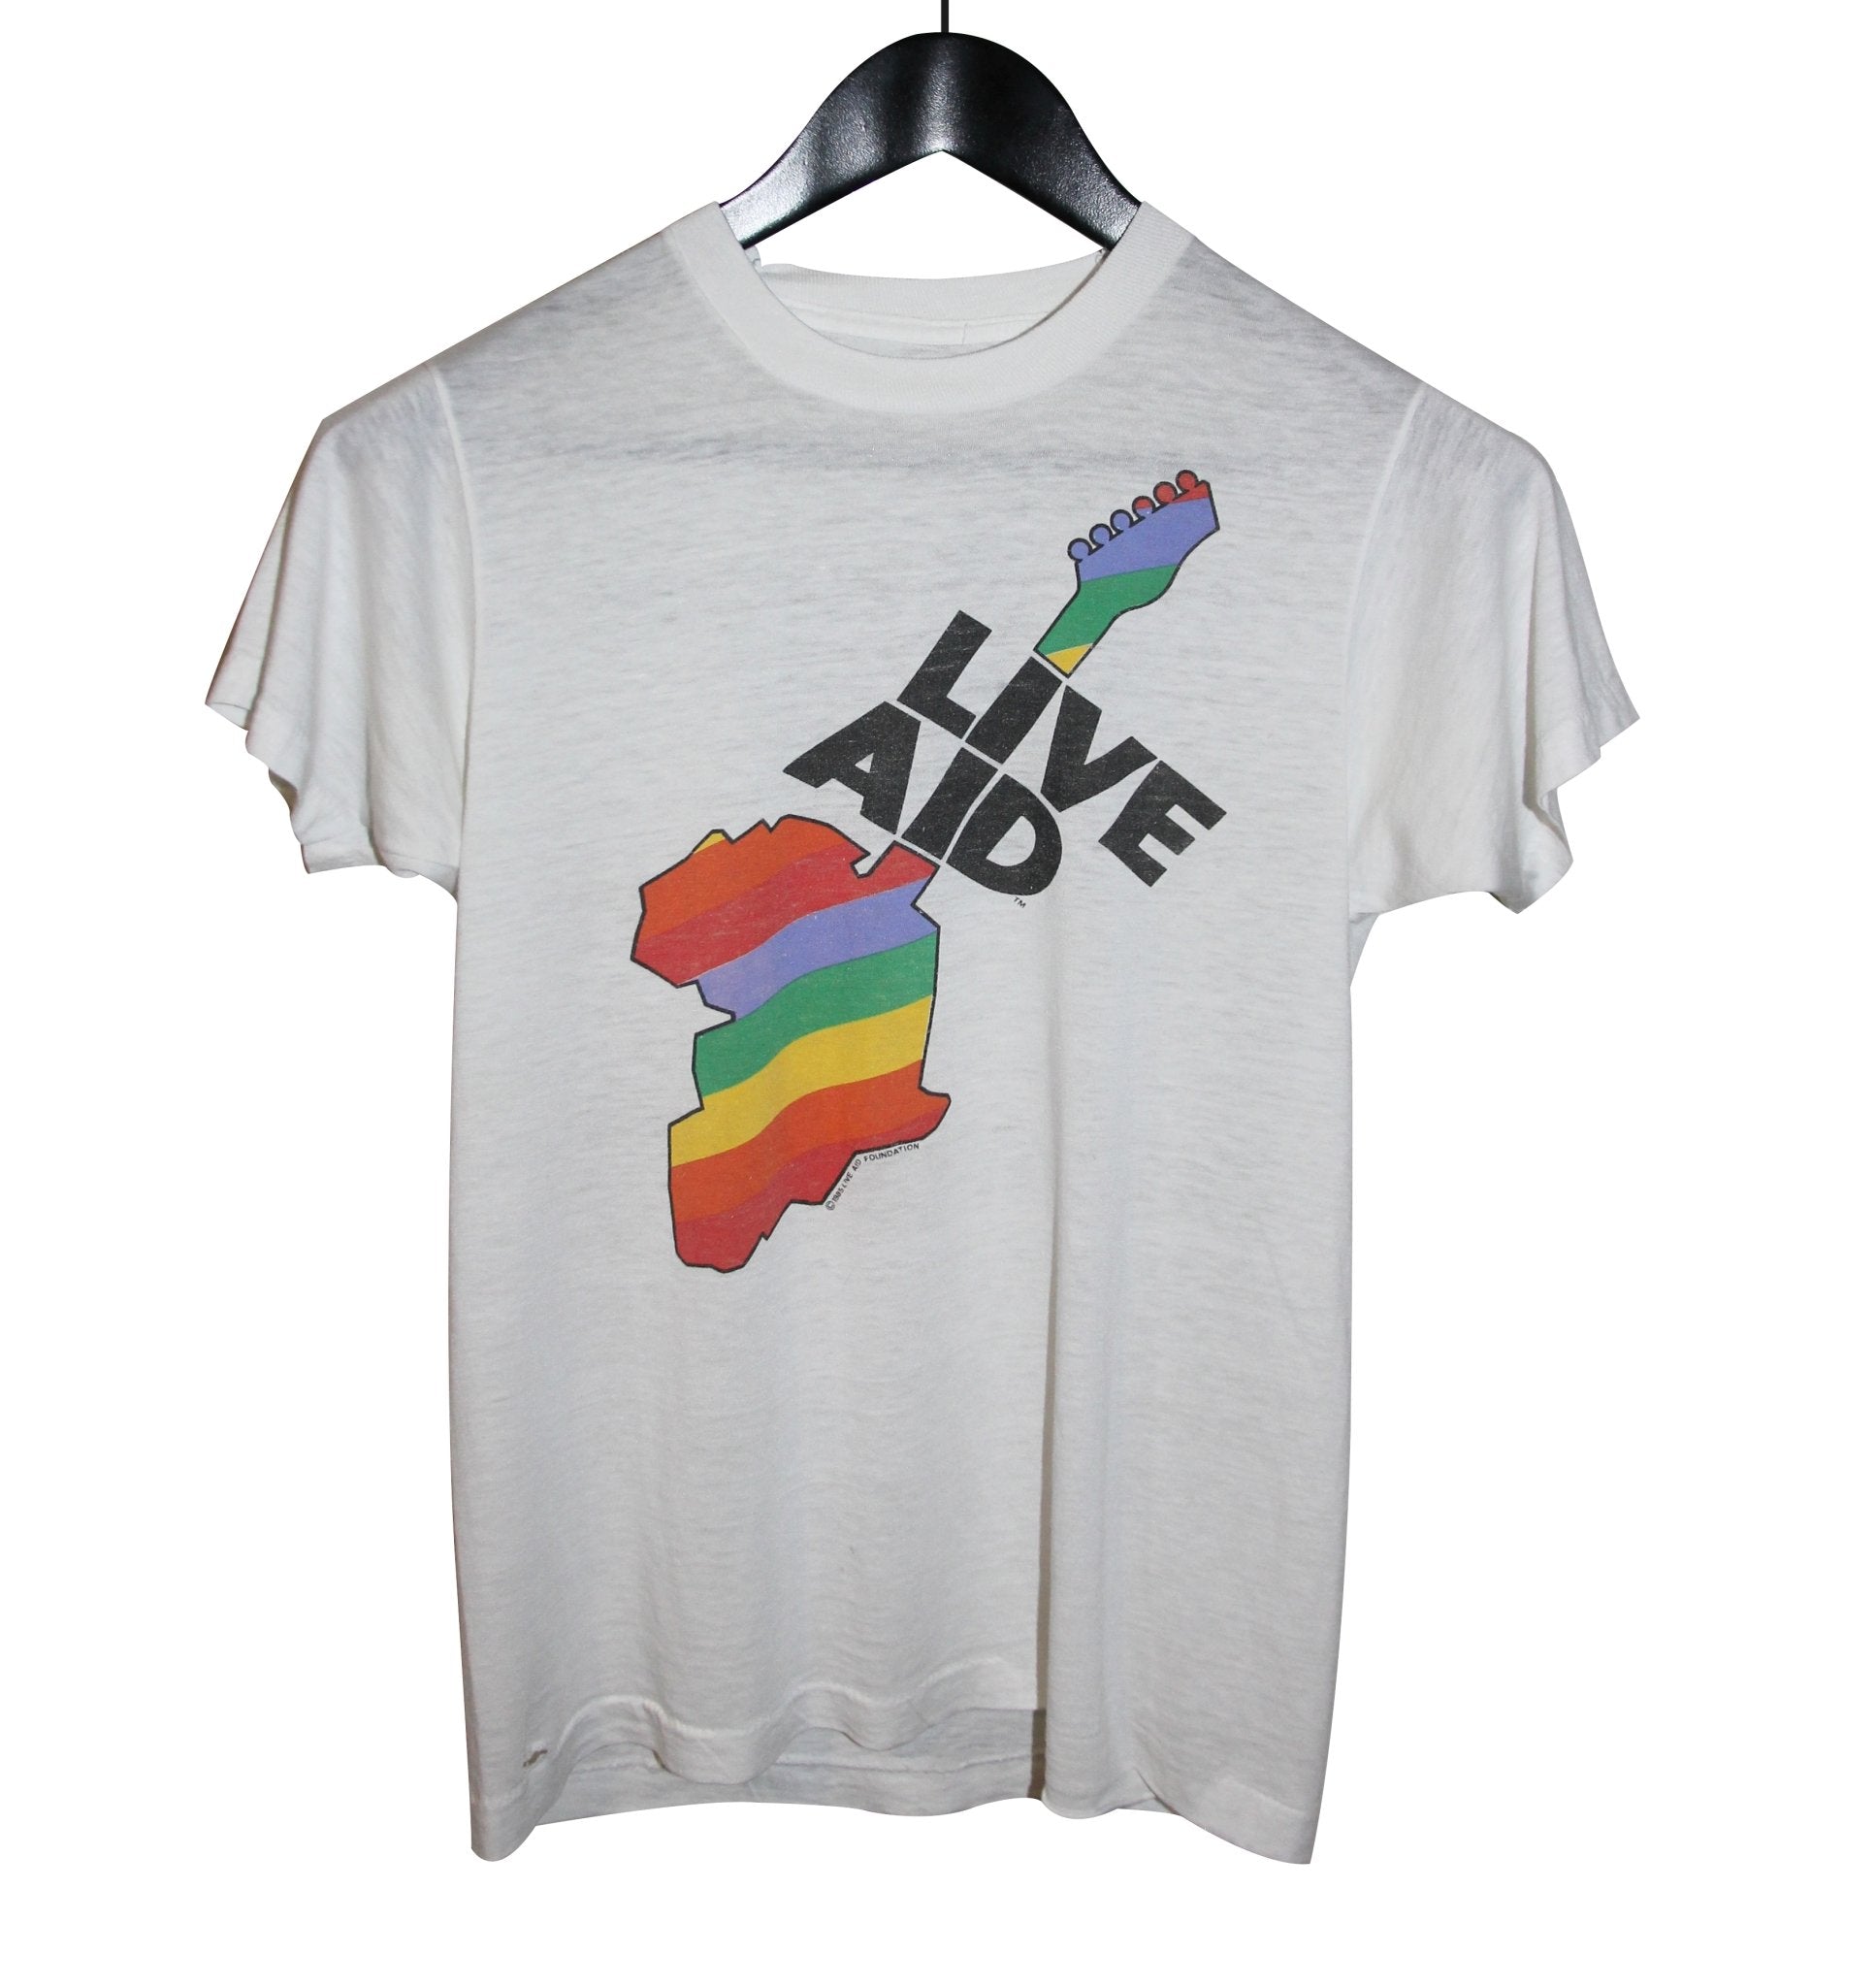 Live Aid 1985 This Shirt Saves Lives - Faded AU